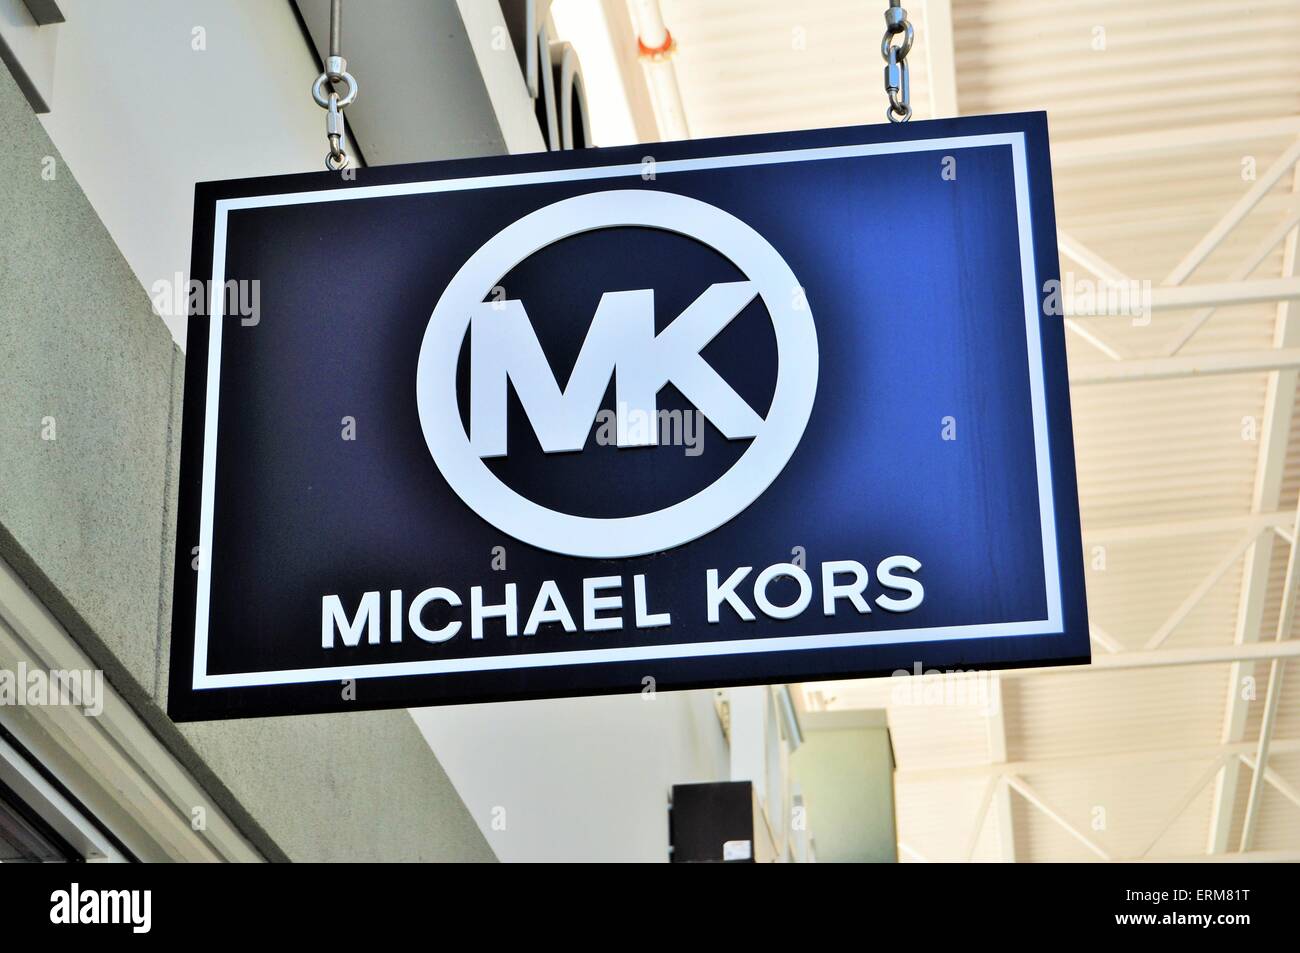 Michael Kors store sign Stock Photo - Alamy